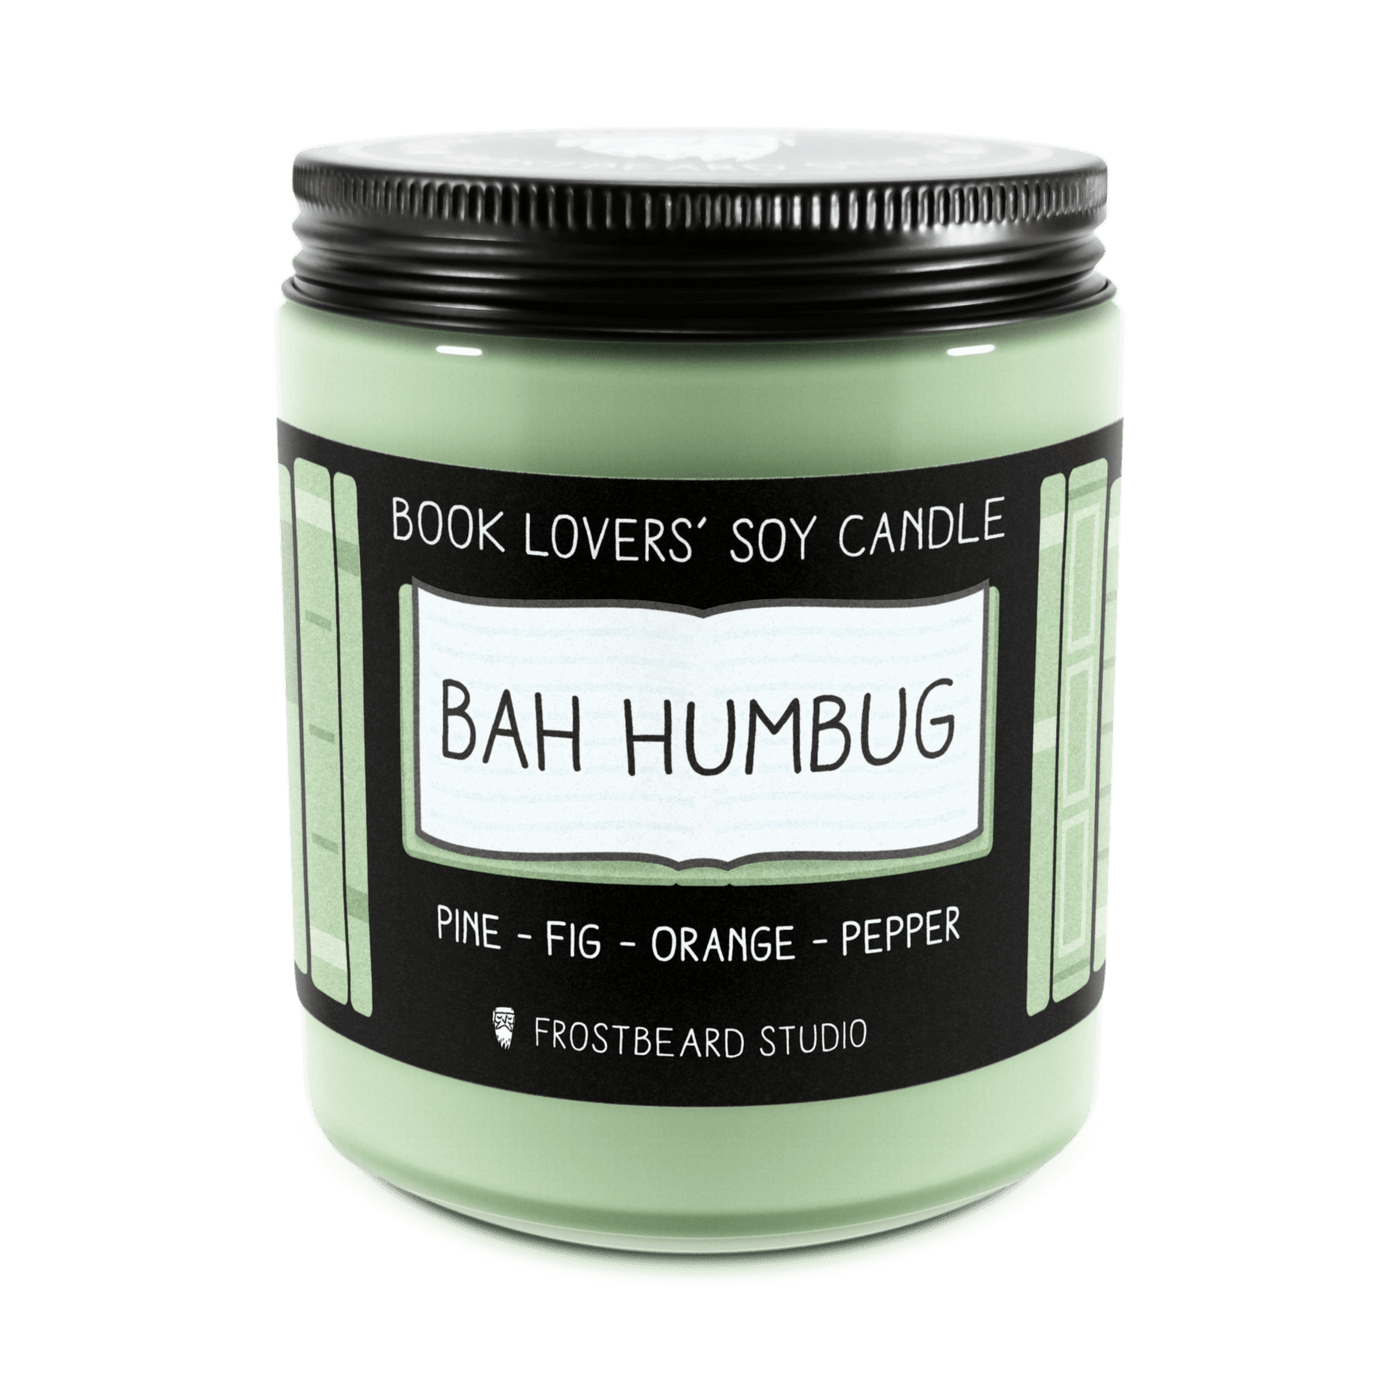 Bah Humbug - 8 oz Jar - Book Lovers' Soy Candle - Frostbeard Studio